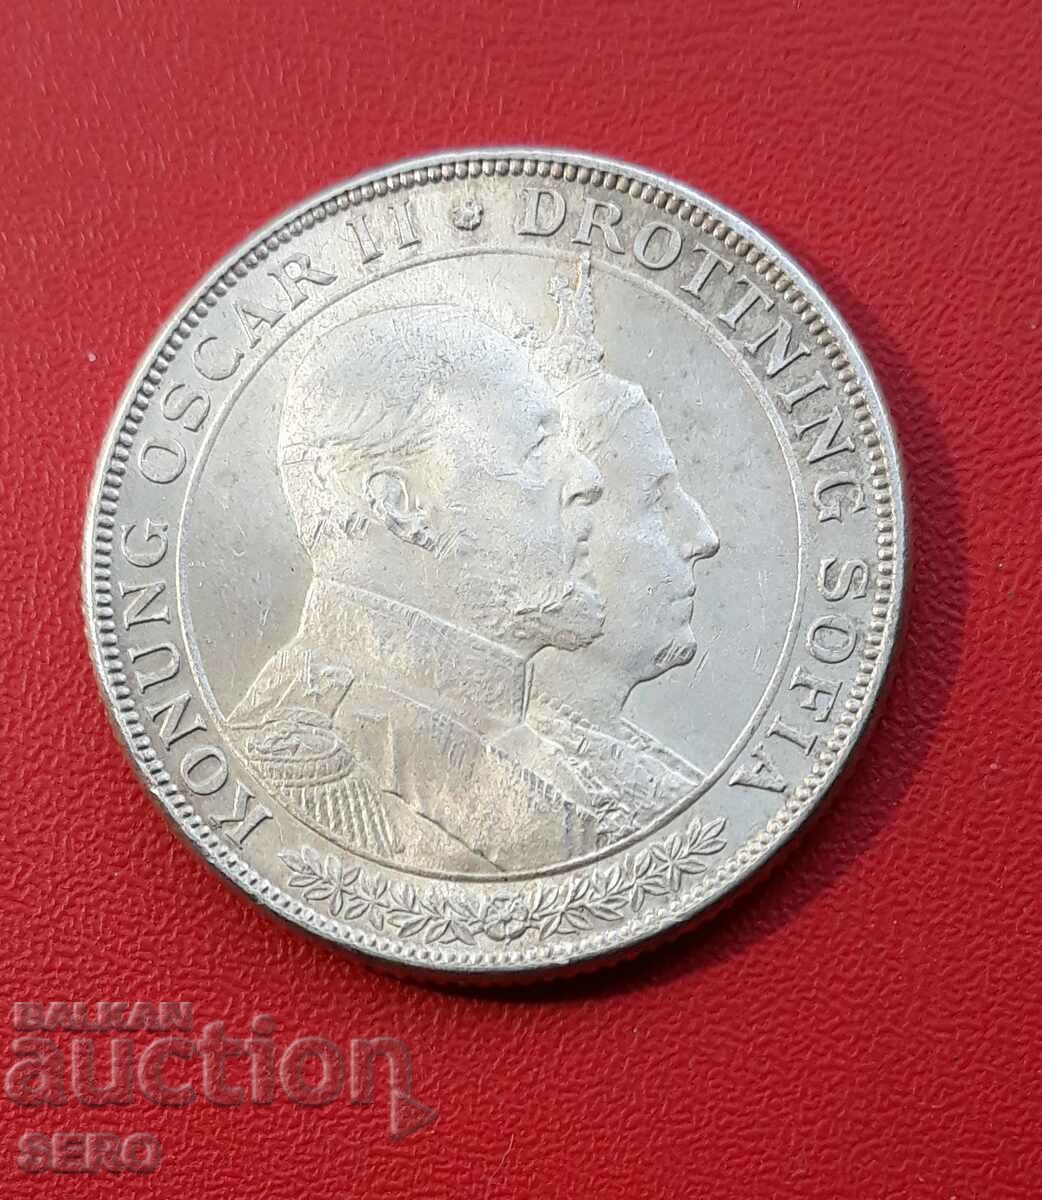 Suedia-2 coroane 1907-argint, rar si foarte bine conservat